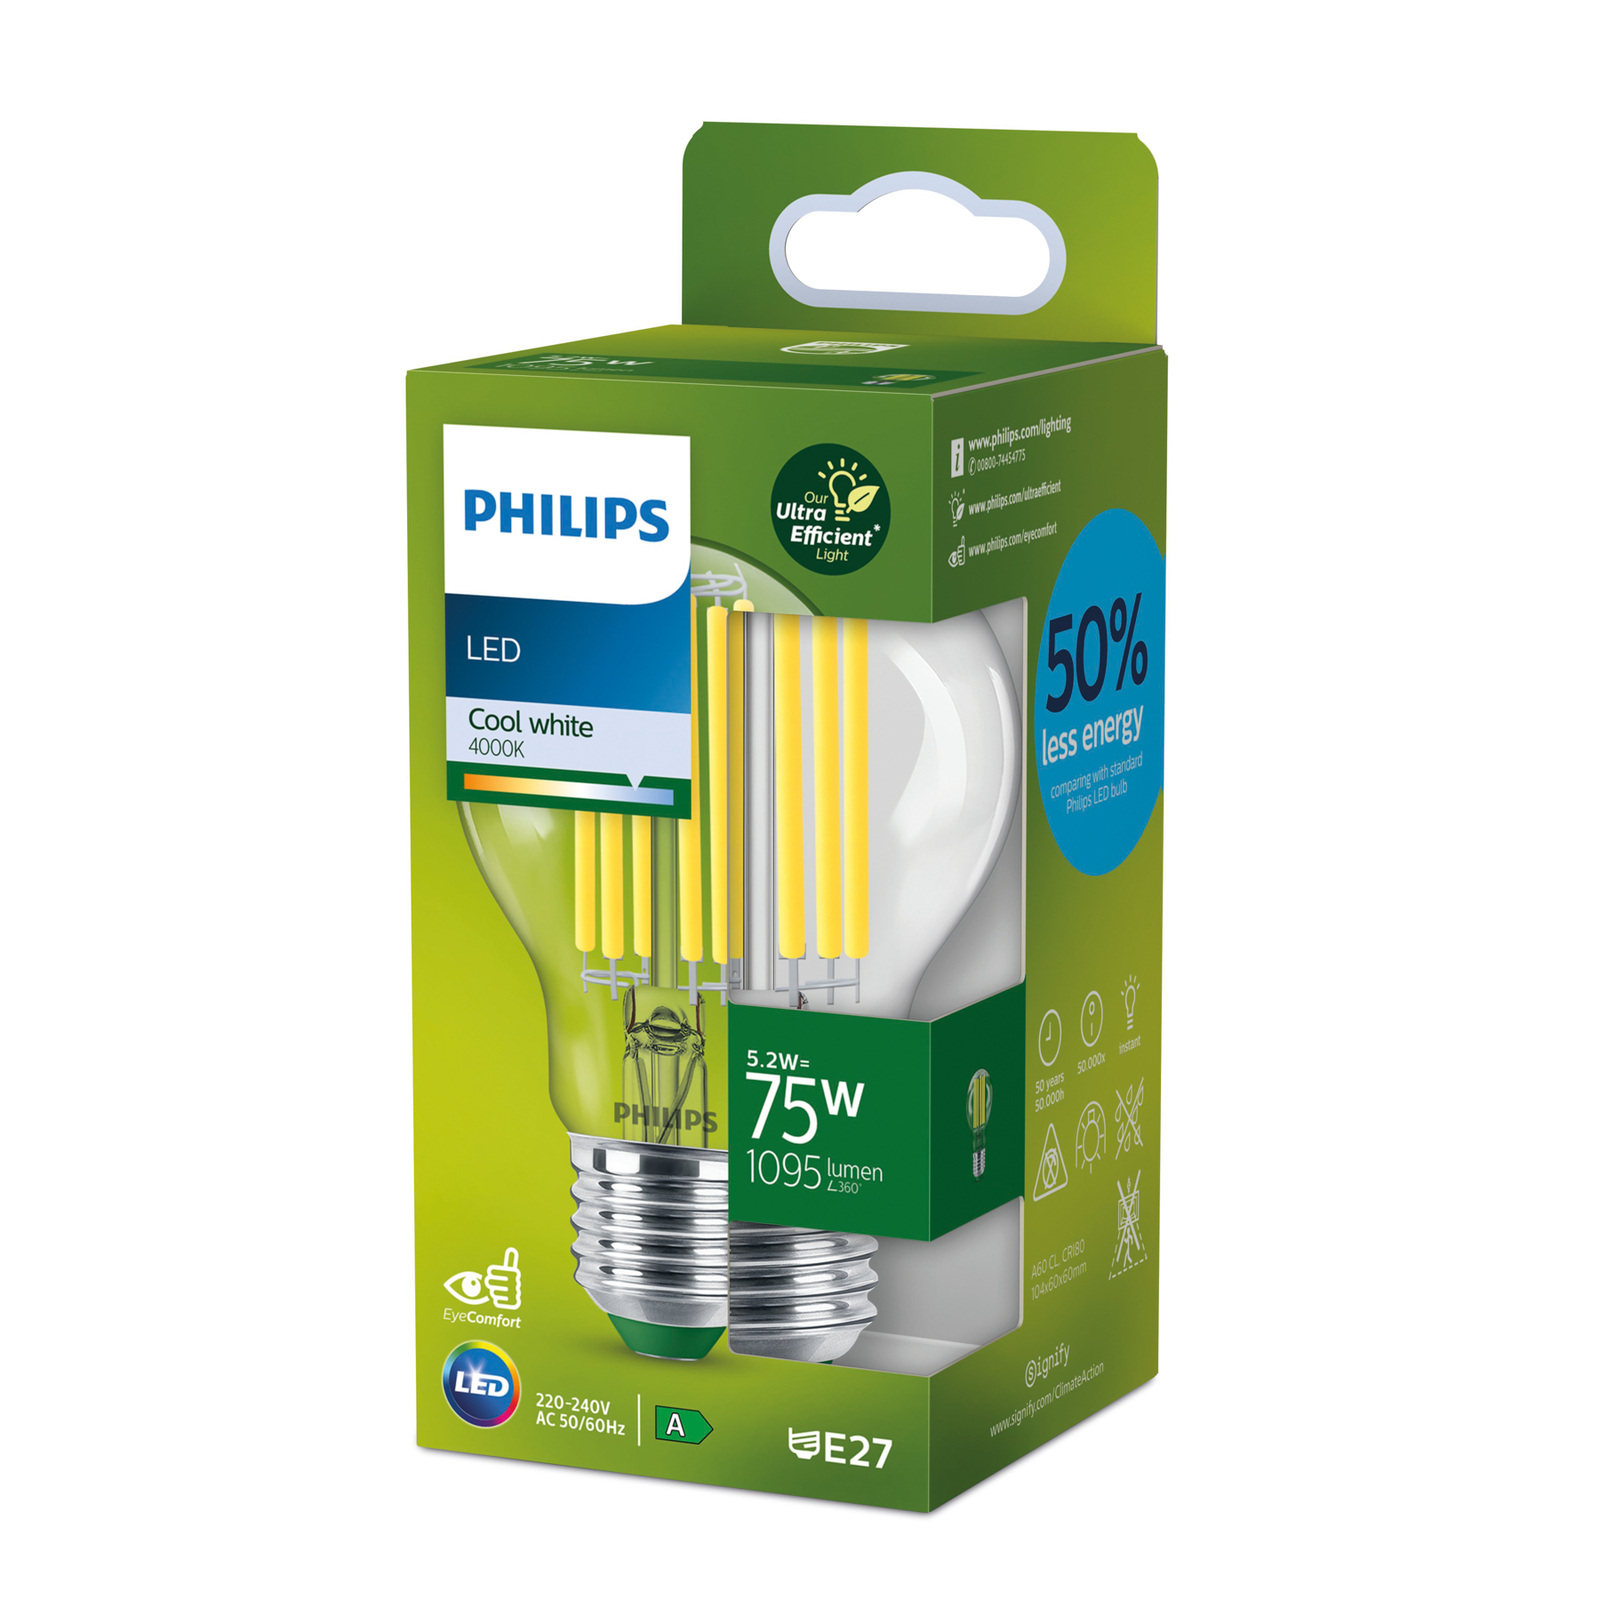 Philips E27 LED lamp A60 5,2W 1095lm 4.000K helder